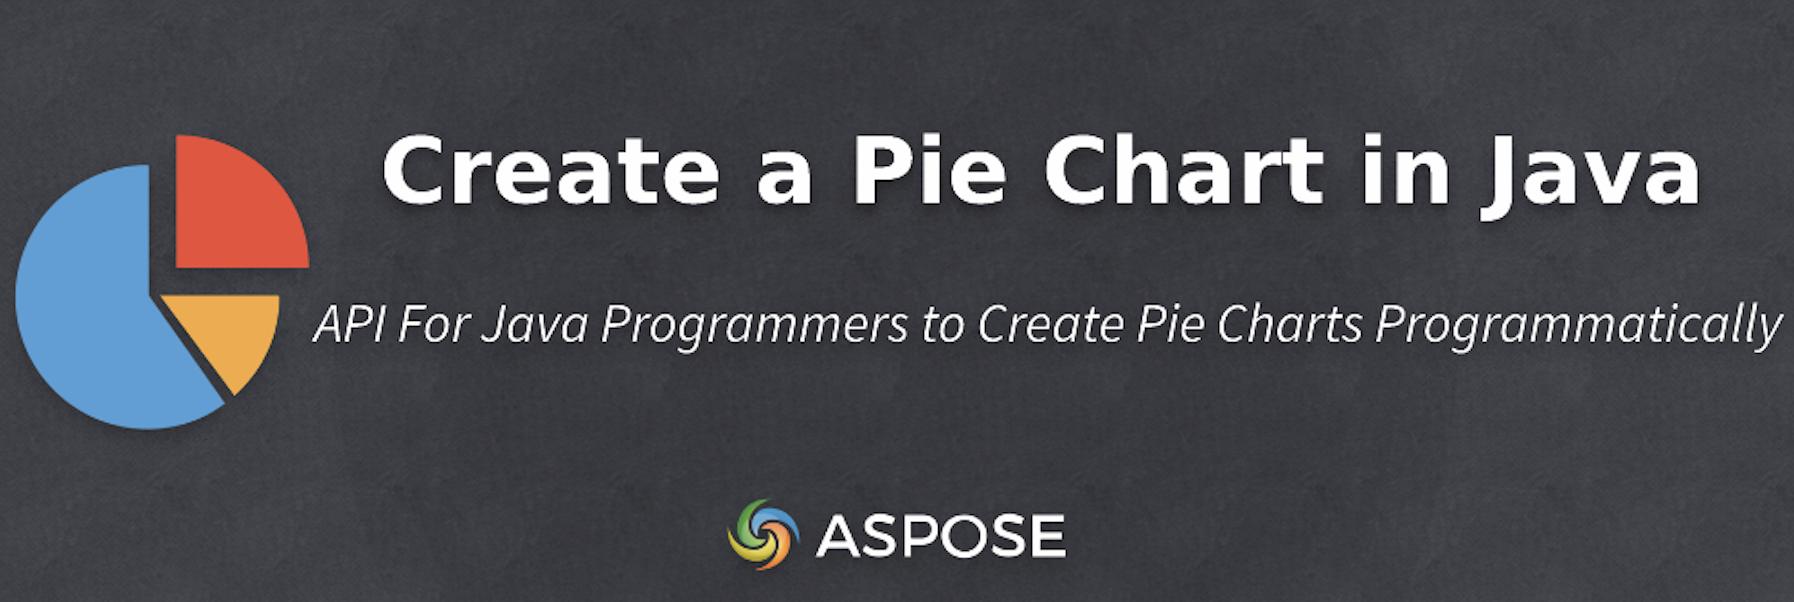 Create a Pie Chart in Java Programmatically